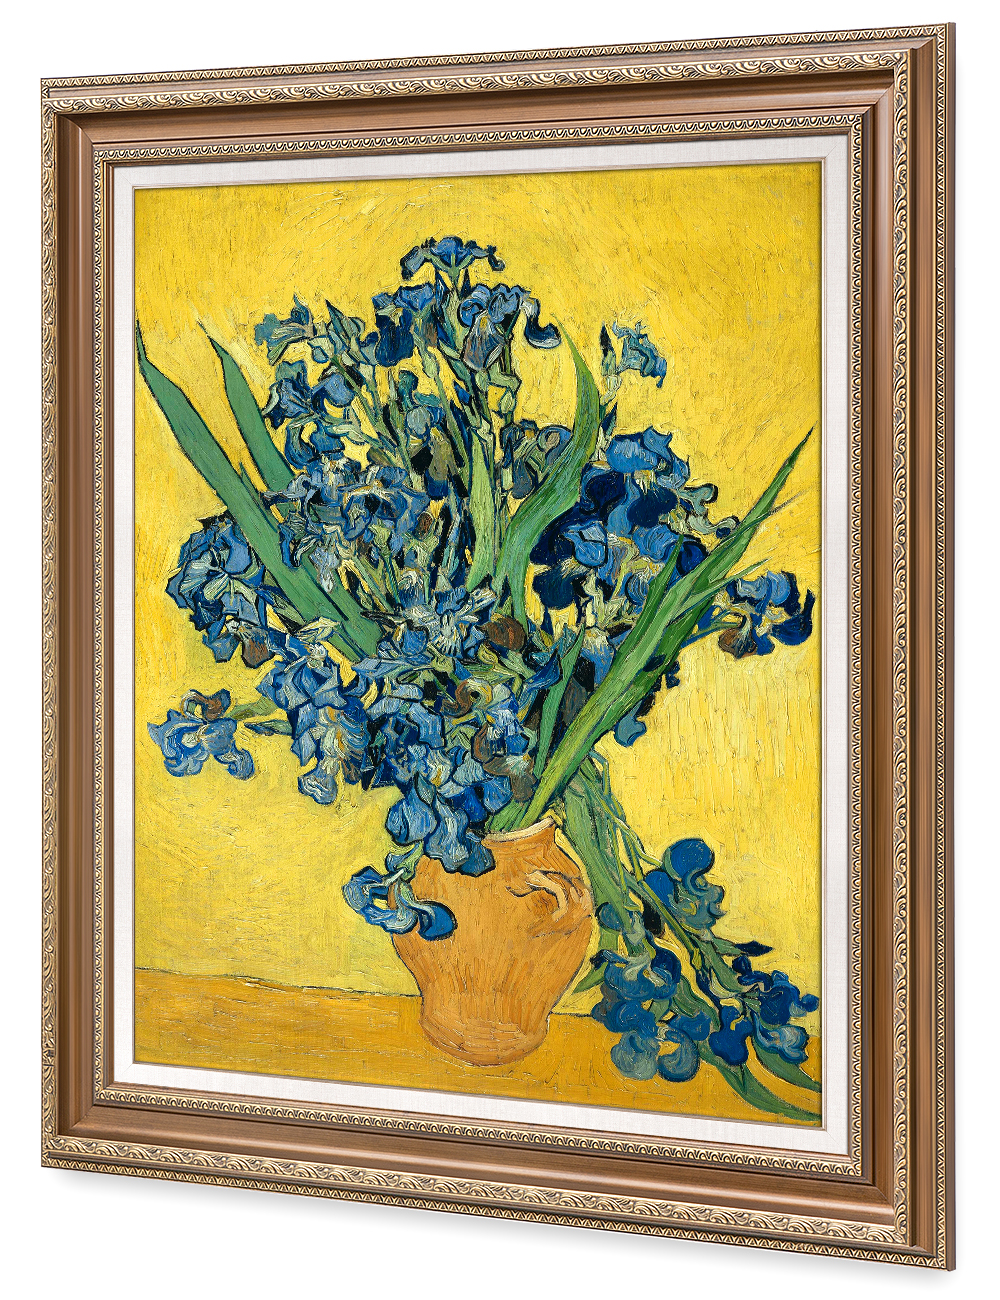 DECORARTS Irises Vase Flower, Vincent Van Gogh Art Reproduction. Acid  Free Cotton Canvas Giclee Print w/ Bronze FrameMat for Wall Decor. Framed  Size: 35x29 in